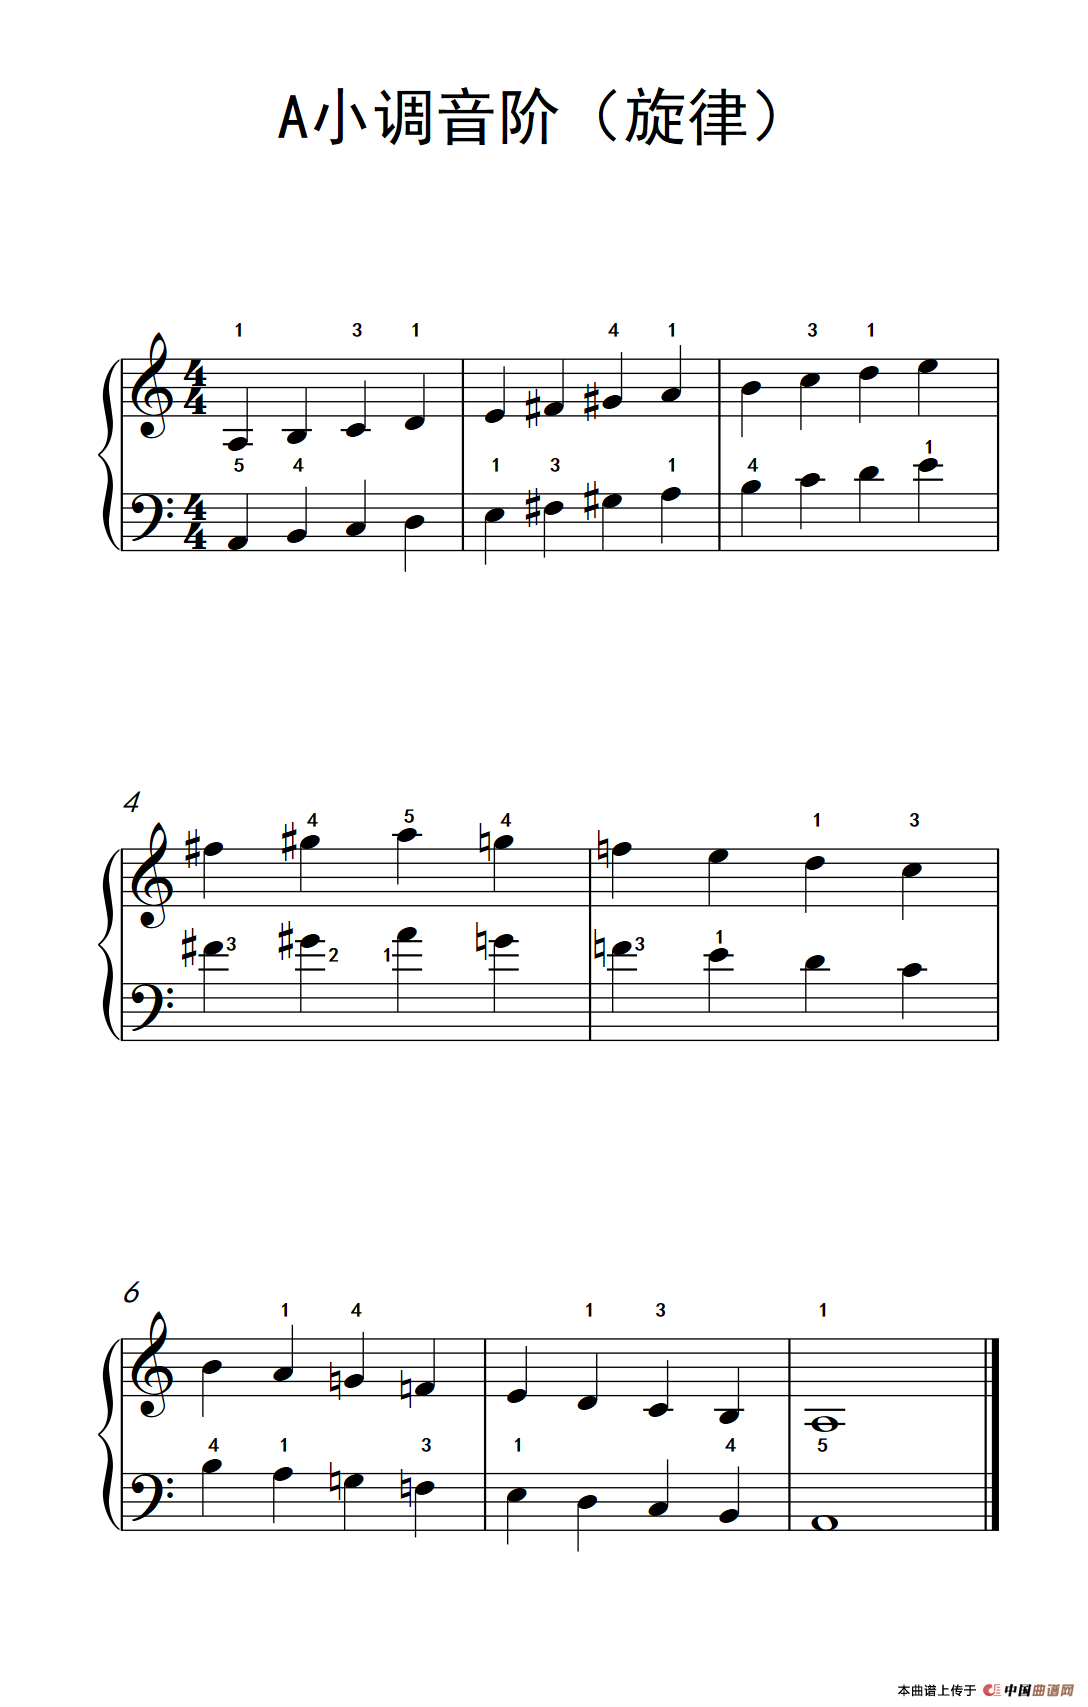 A小调音阶(旋律)(儿童钢琴练习曲)_钢琴谱_